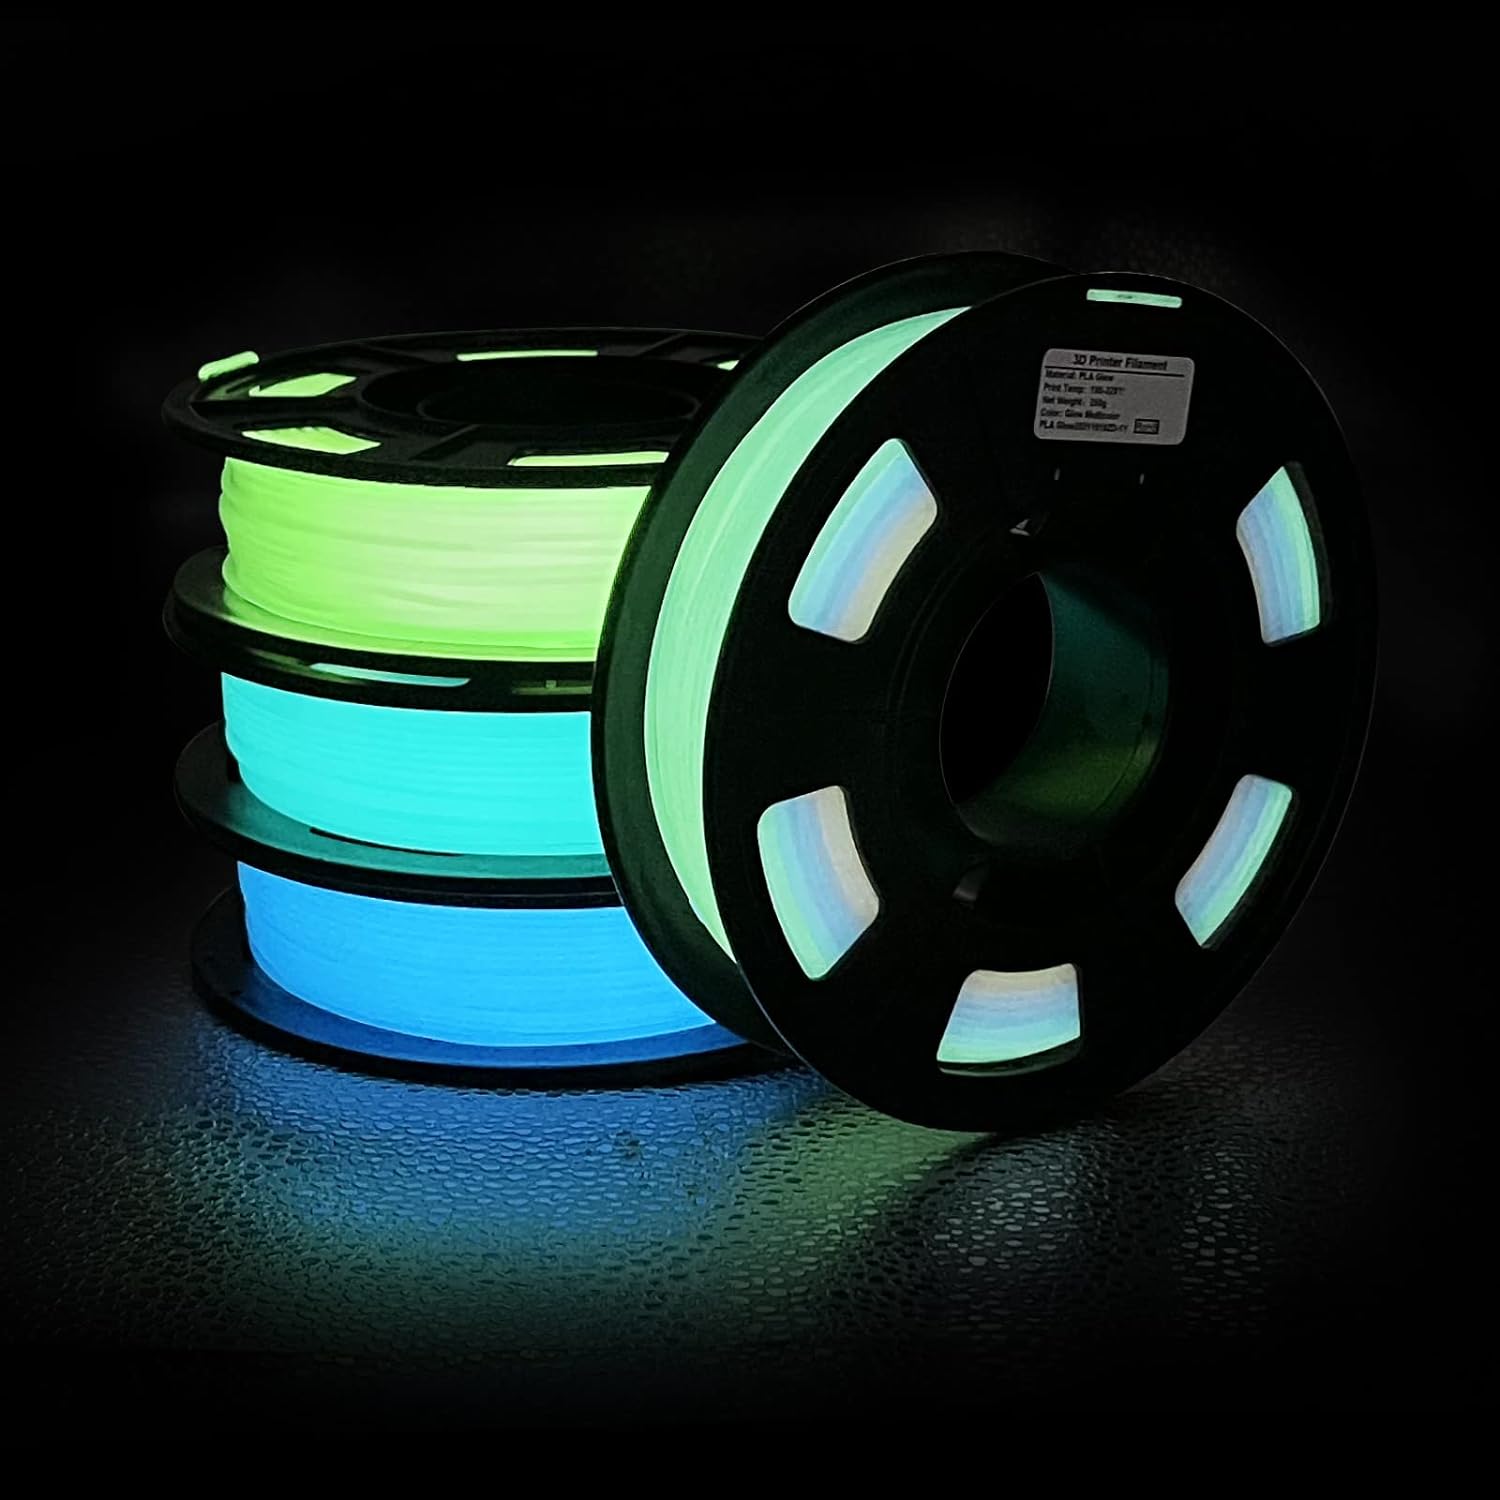 3d-printer-filament-bundle-glow-in-the-dark-filament-multicolor-green-blue-and-blue-green-pla-filament-175-mm-dimensiona-2 3D Printer Filament Bundle Review